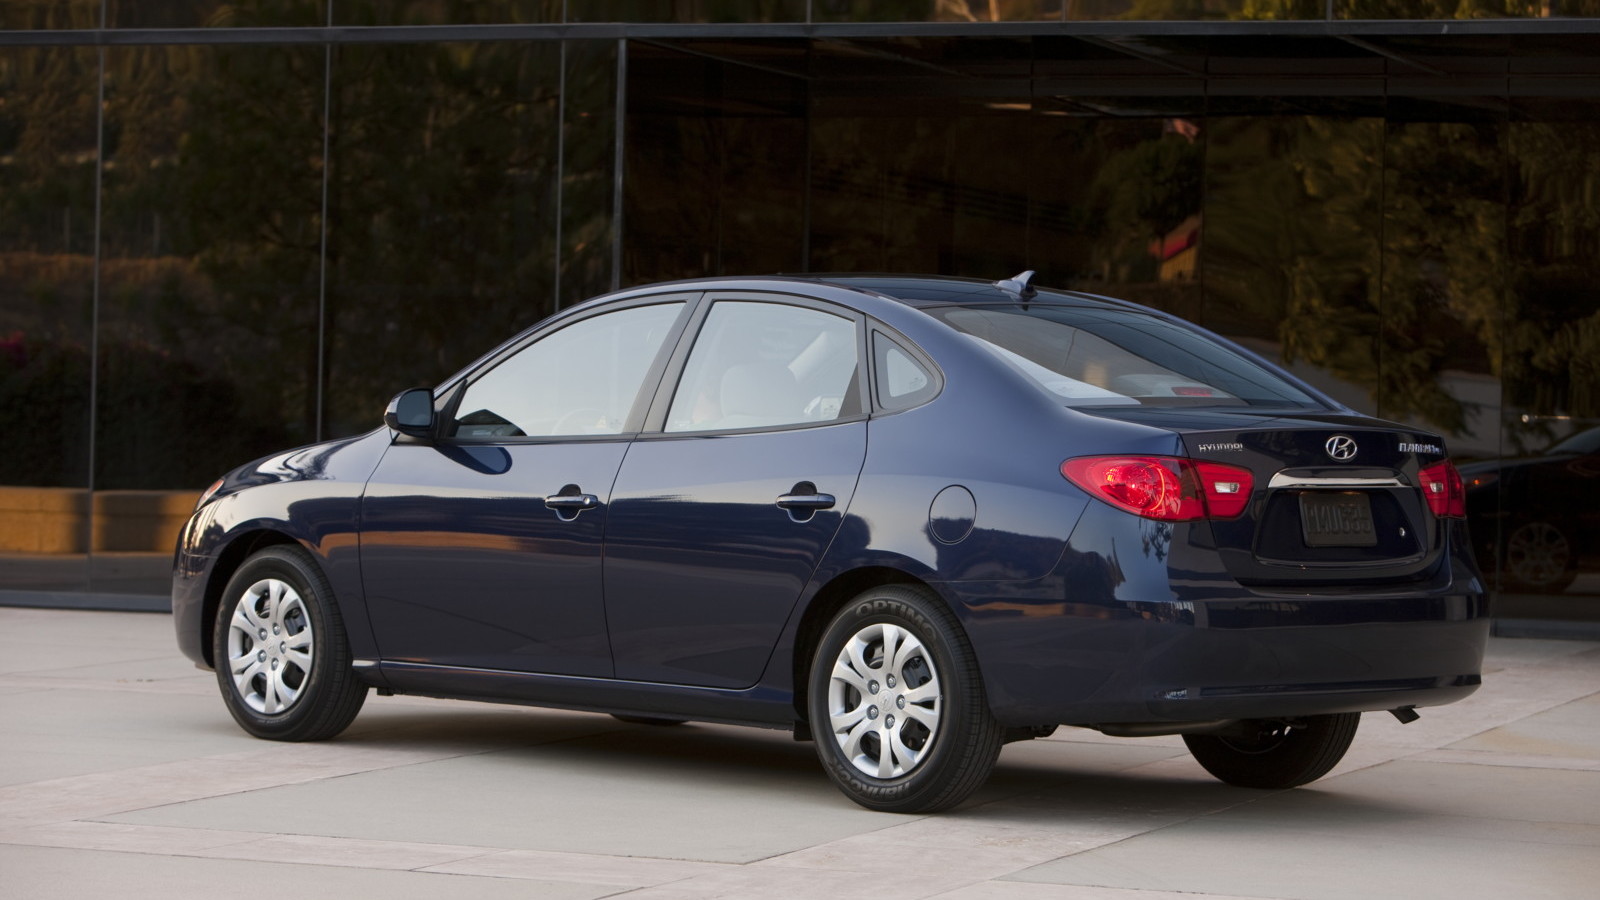 2010 Hyundai Elantra Blue: Higher MPG, Just $25 More